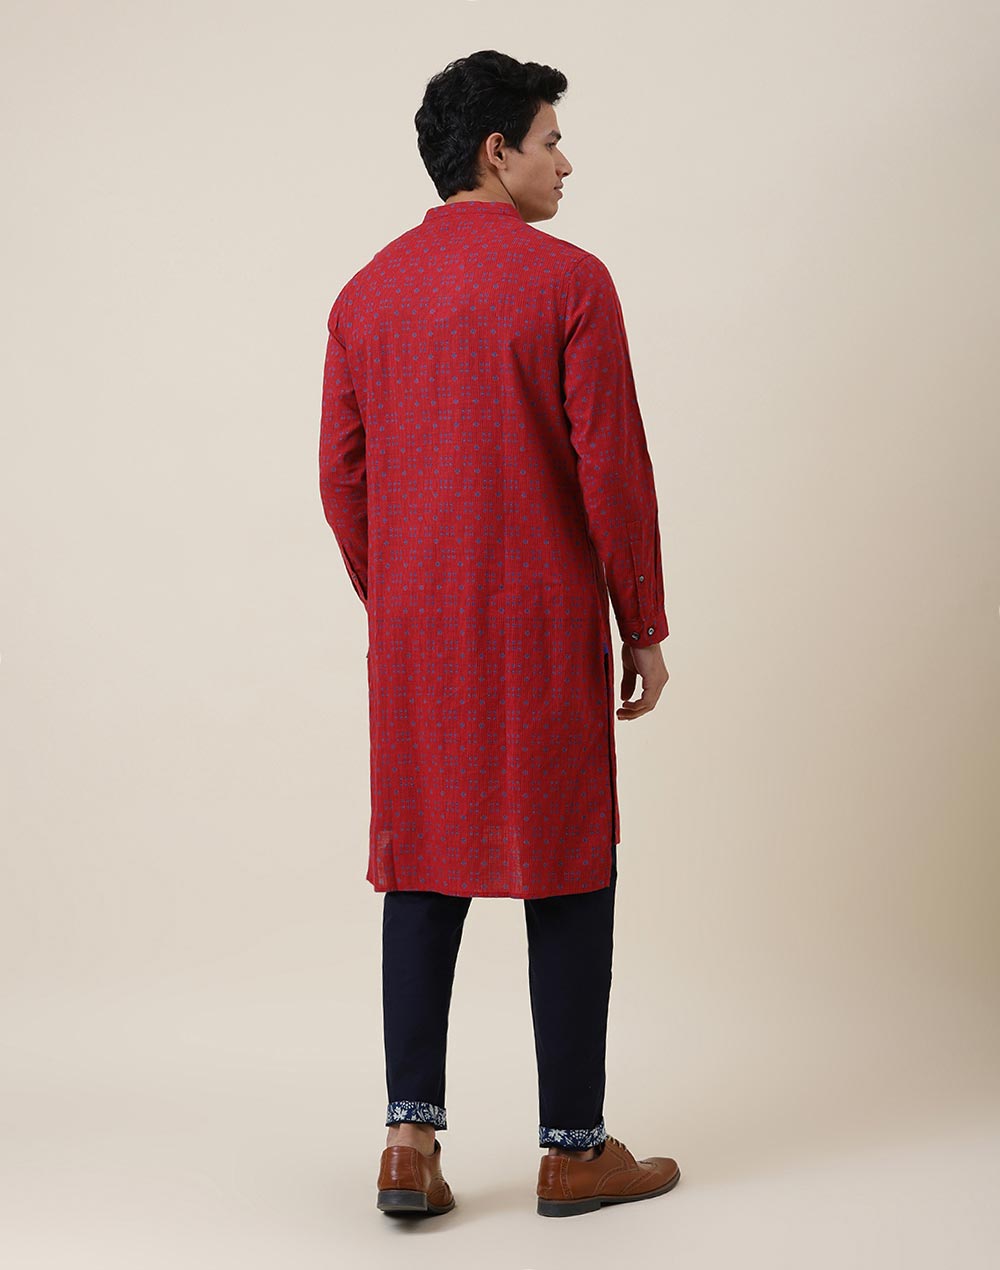 NUIndian Red Cotton Slim Fit Printed Long Kurta